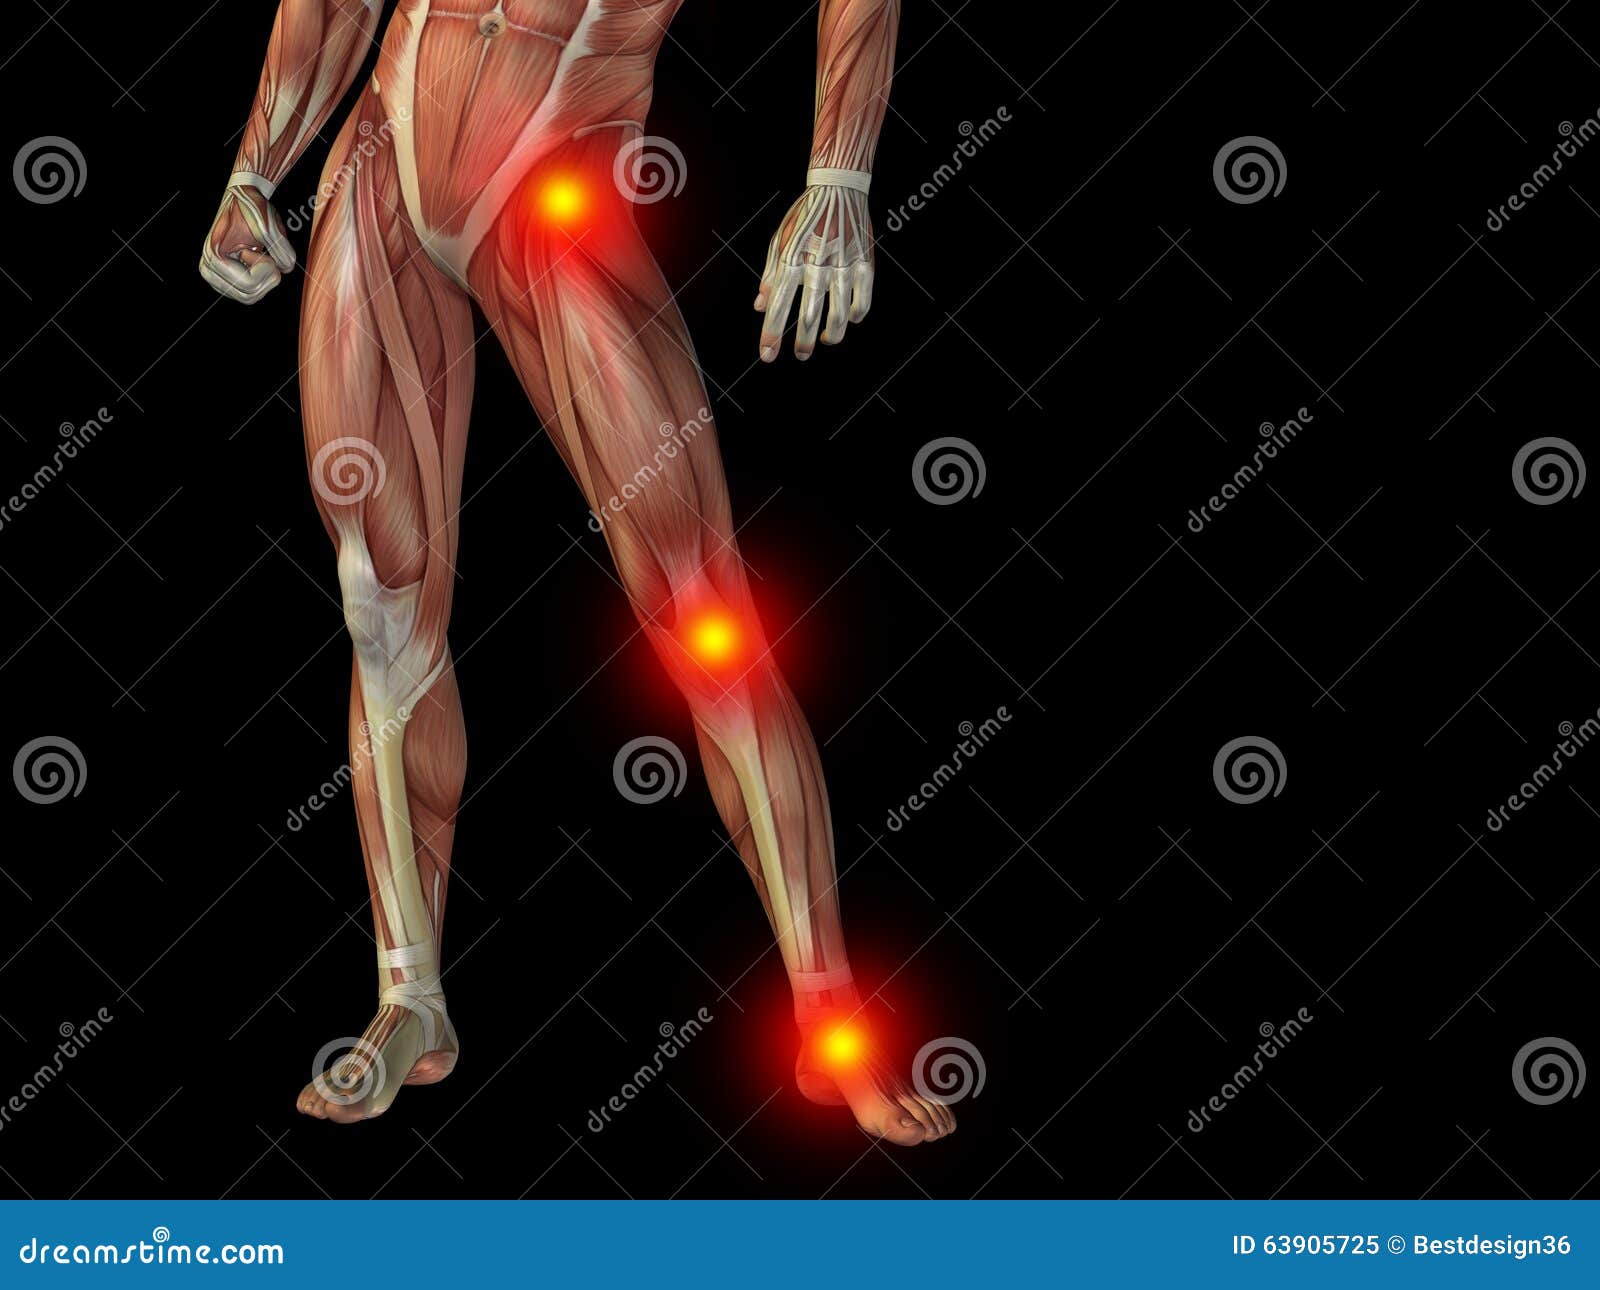 12,513 Human Anatomy Pain Photos - Free & Royalty-Free Stock Photos